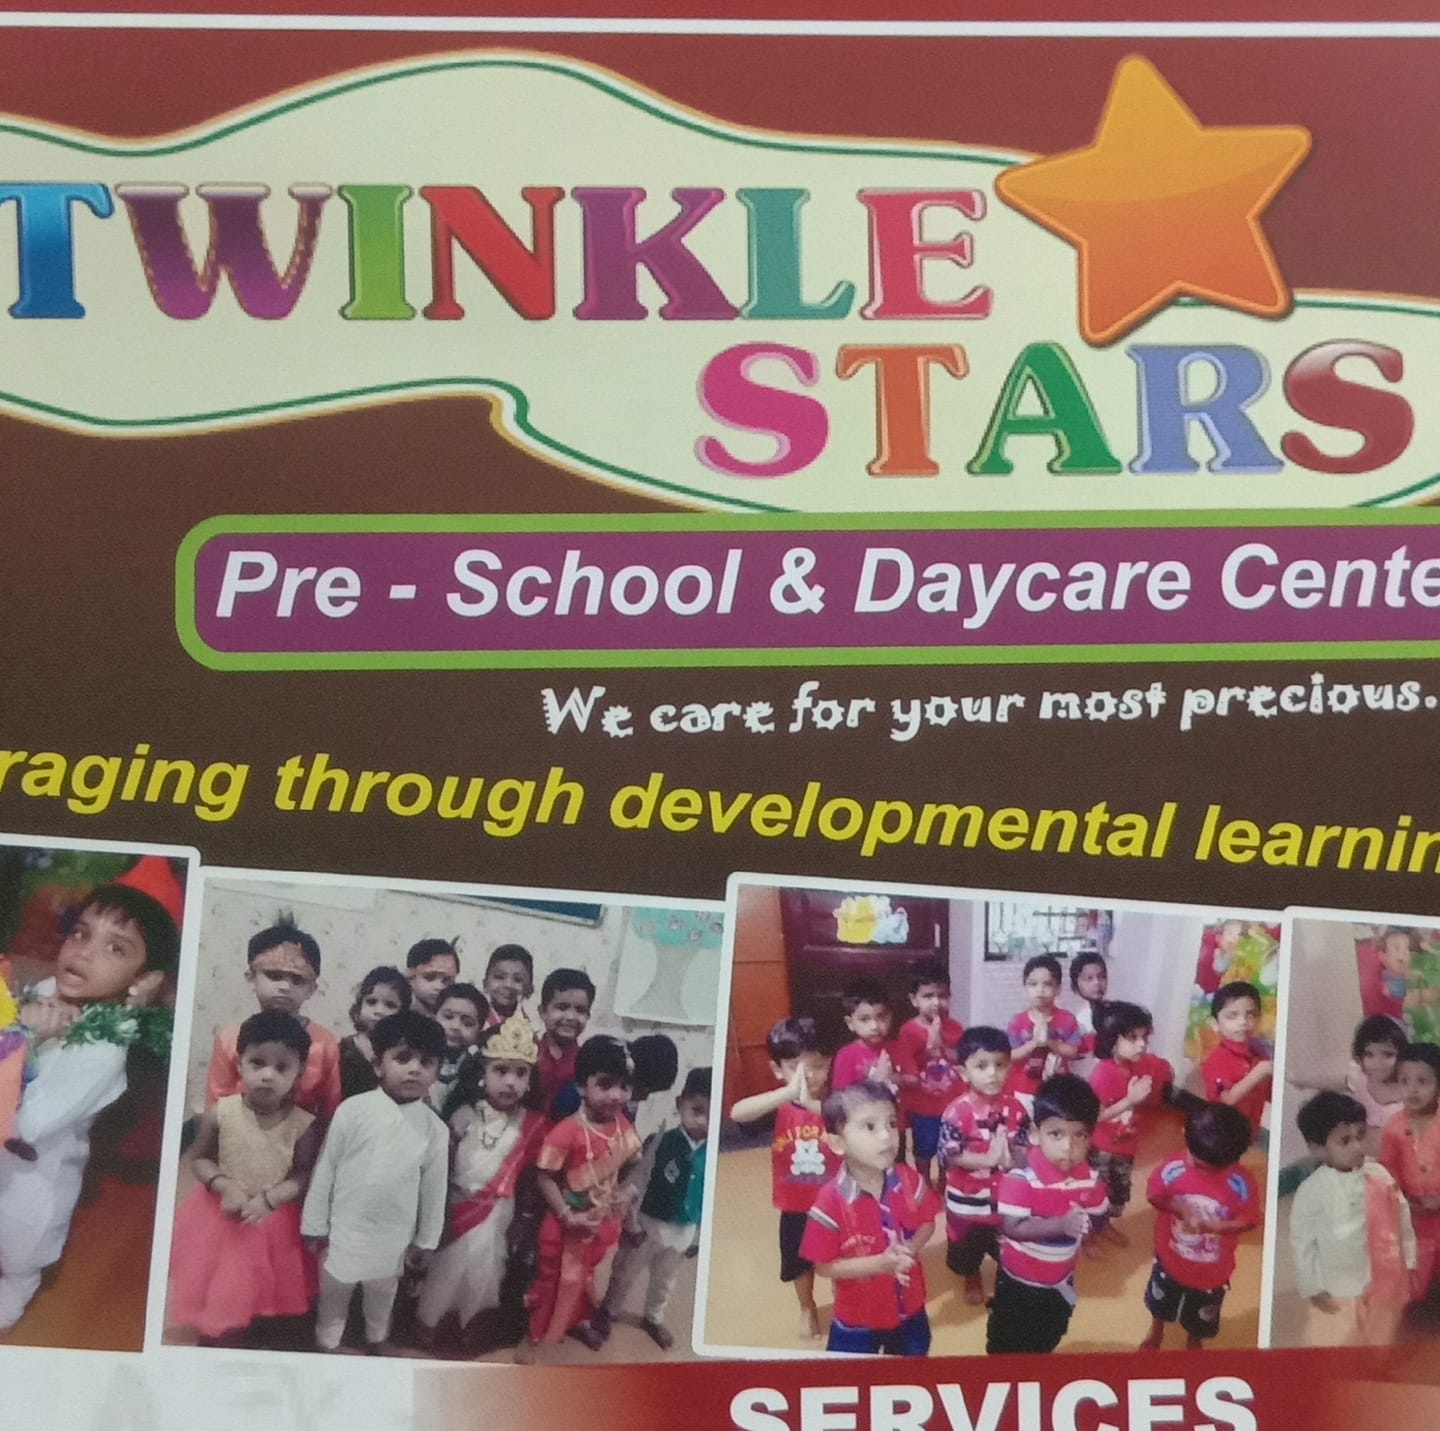 Twinkle Star English Nursery